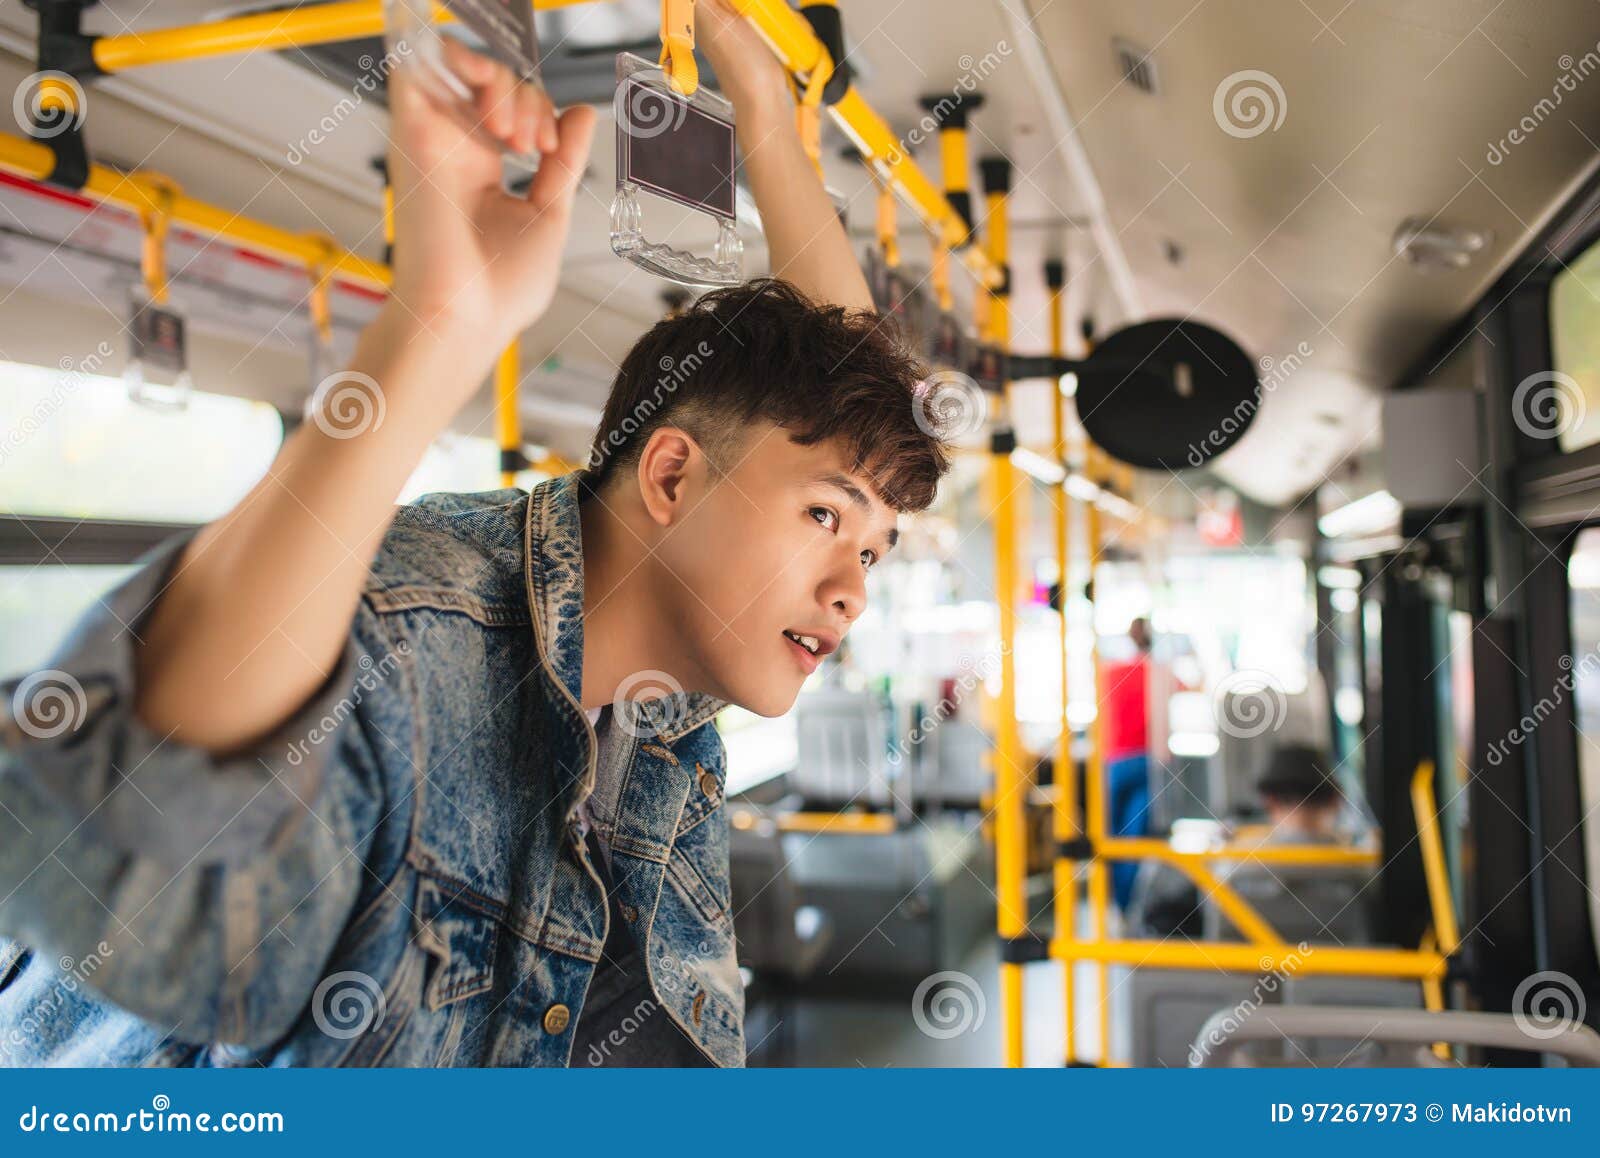 Asian Man Taking Public Transport Standing Inside Bus